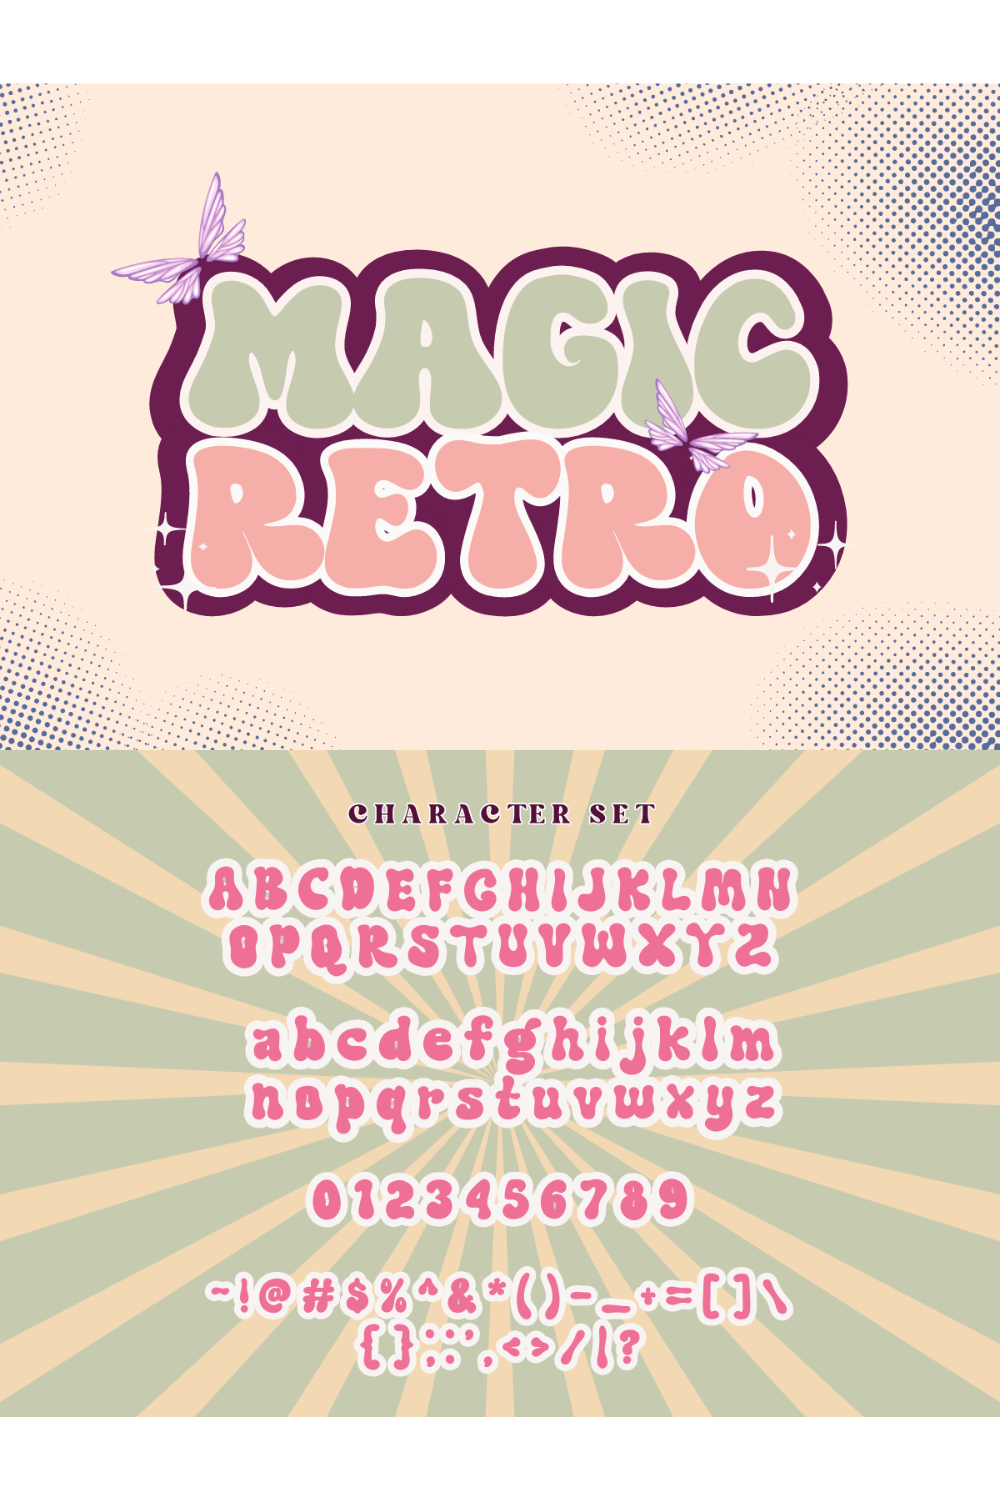 Magic Retro - Retro groovy Font pinterest preview image.